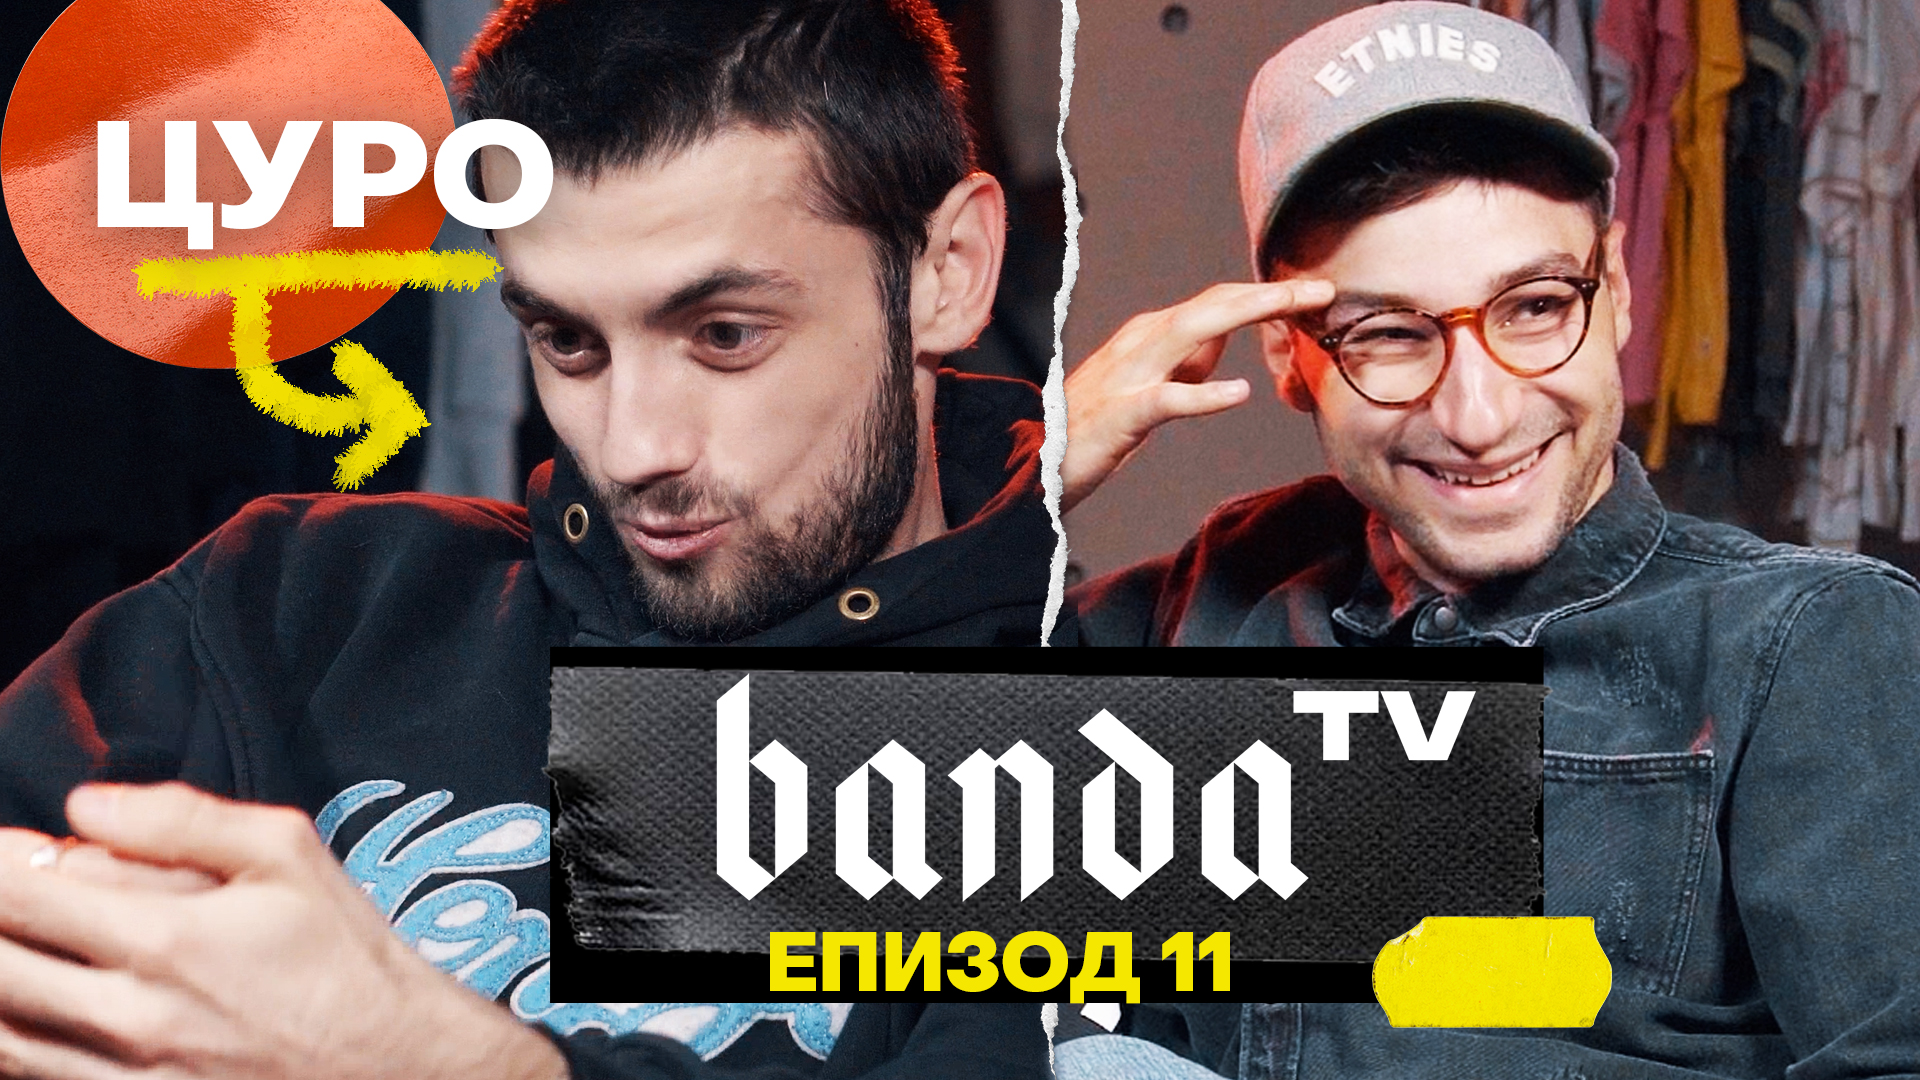 Banda TV - Цуро ин дъ хаус (ЕП. 11)